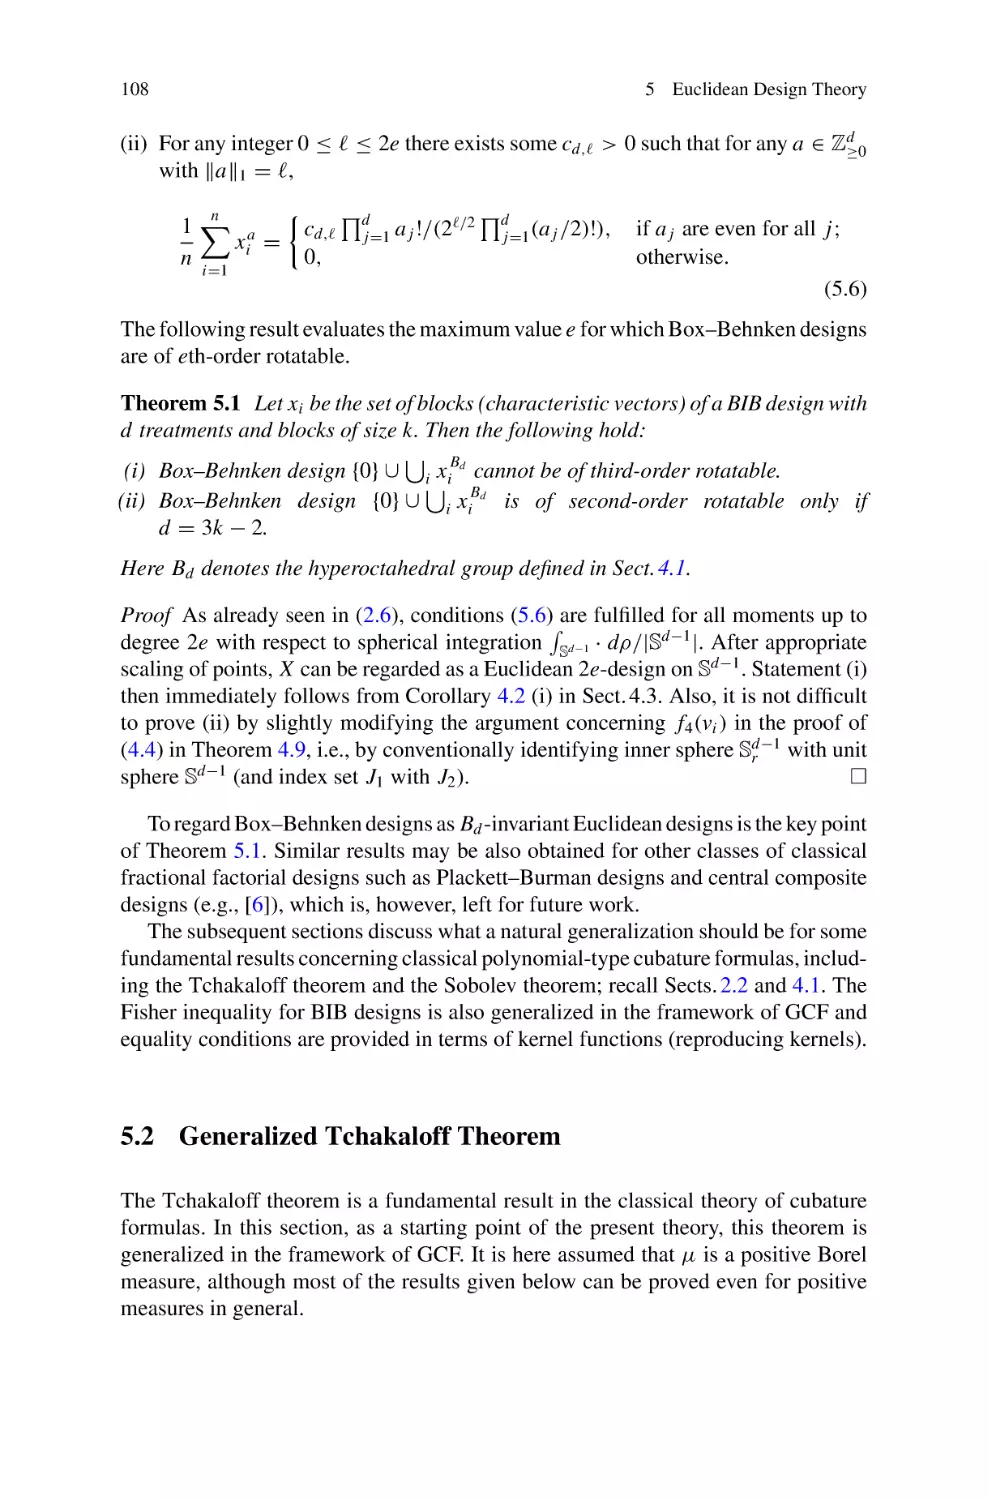 5.2 Generalized Tchakaloff Theorem